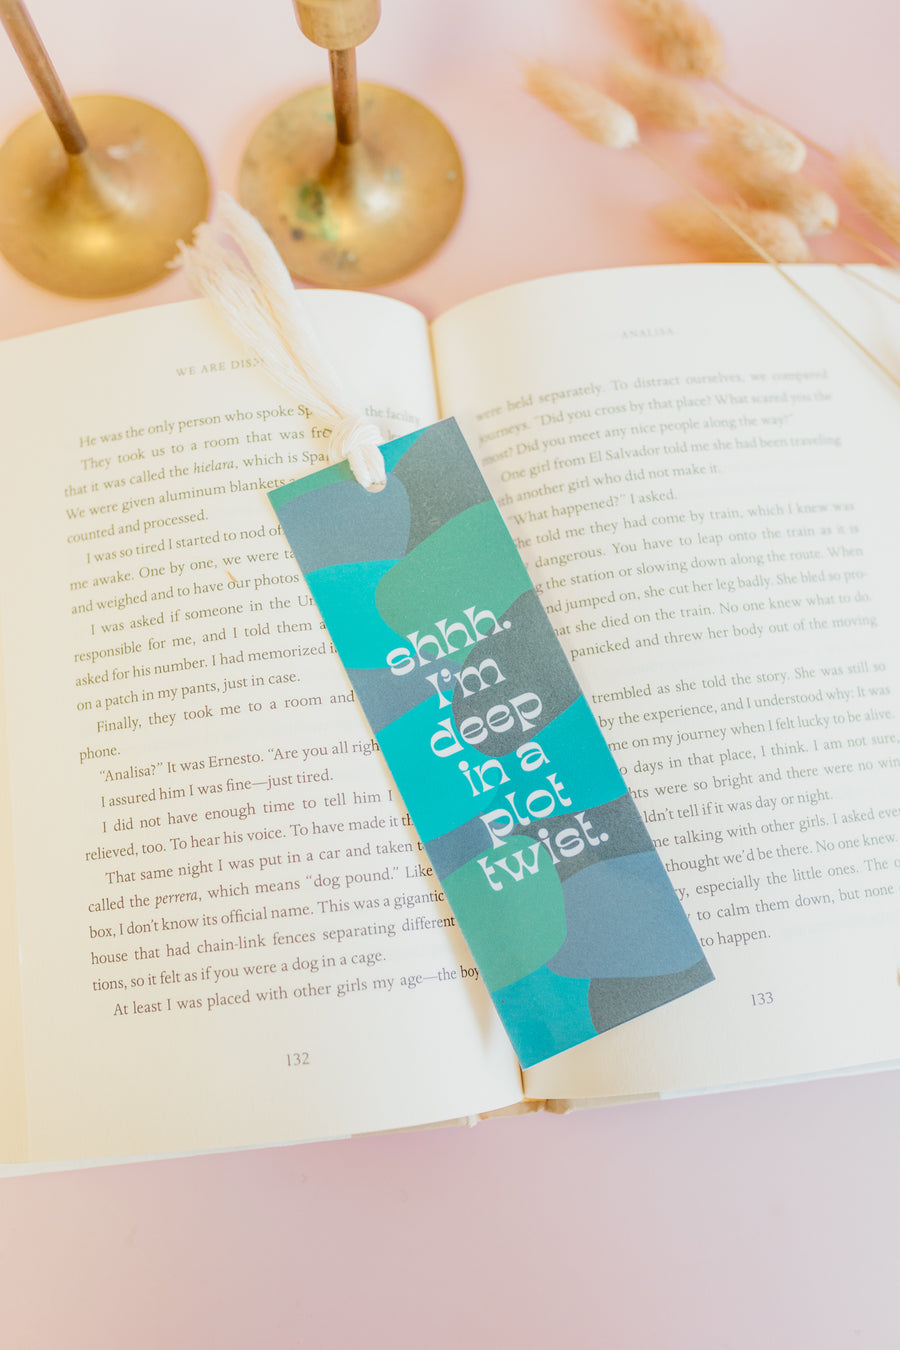 Handmade Bookmarks